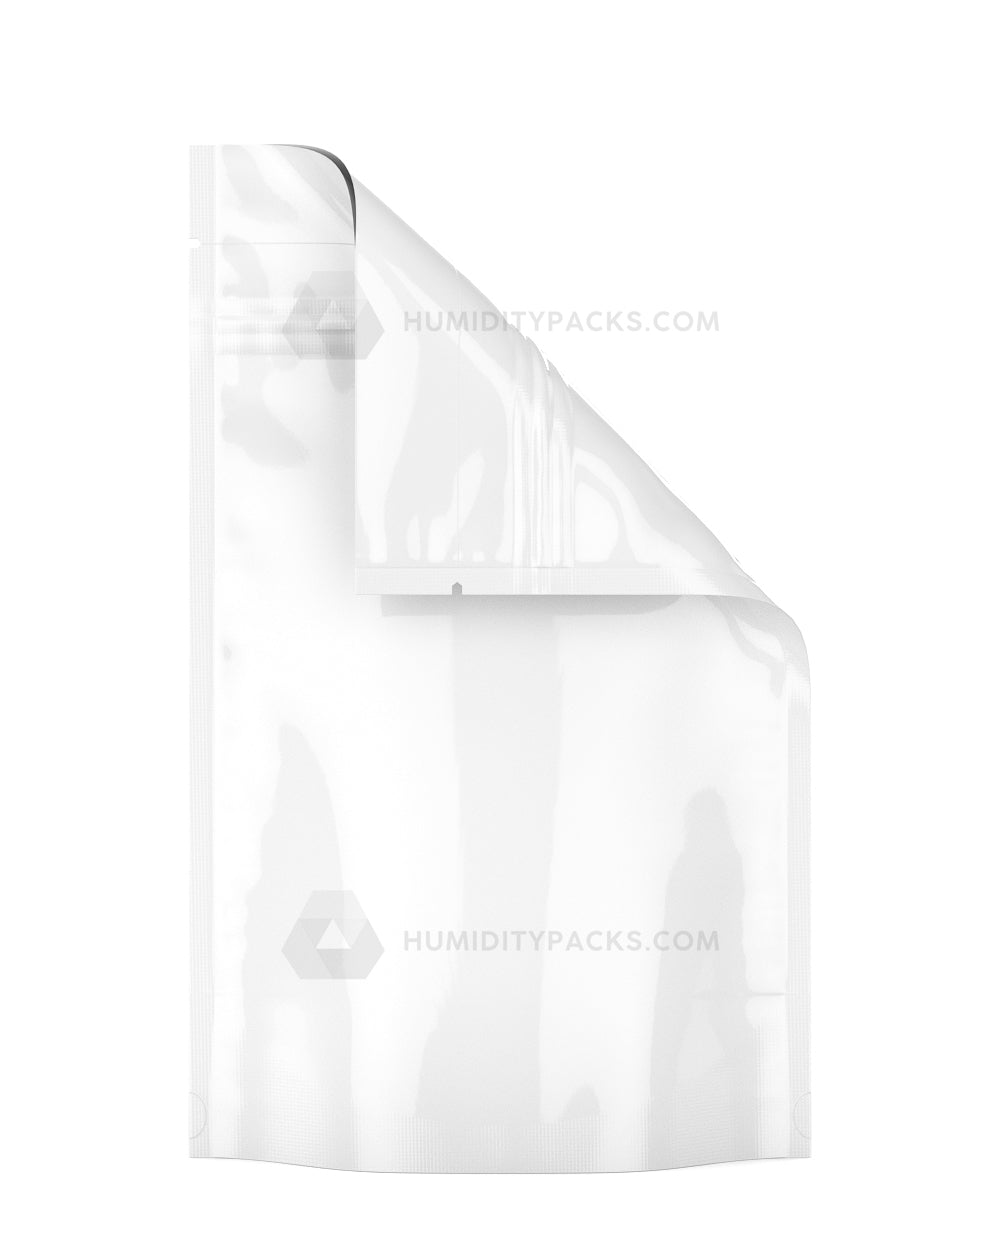 Glossy-White 5" x 8.1" Mylar Tamper Evident Bags (14 grams) 1000/Box